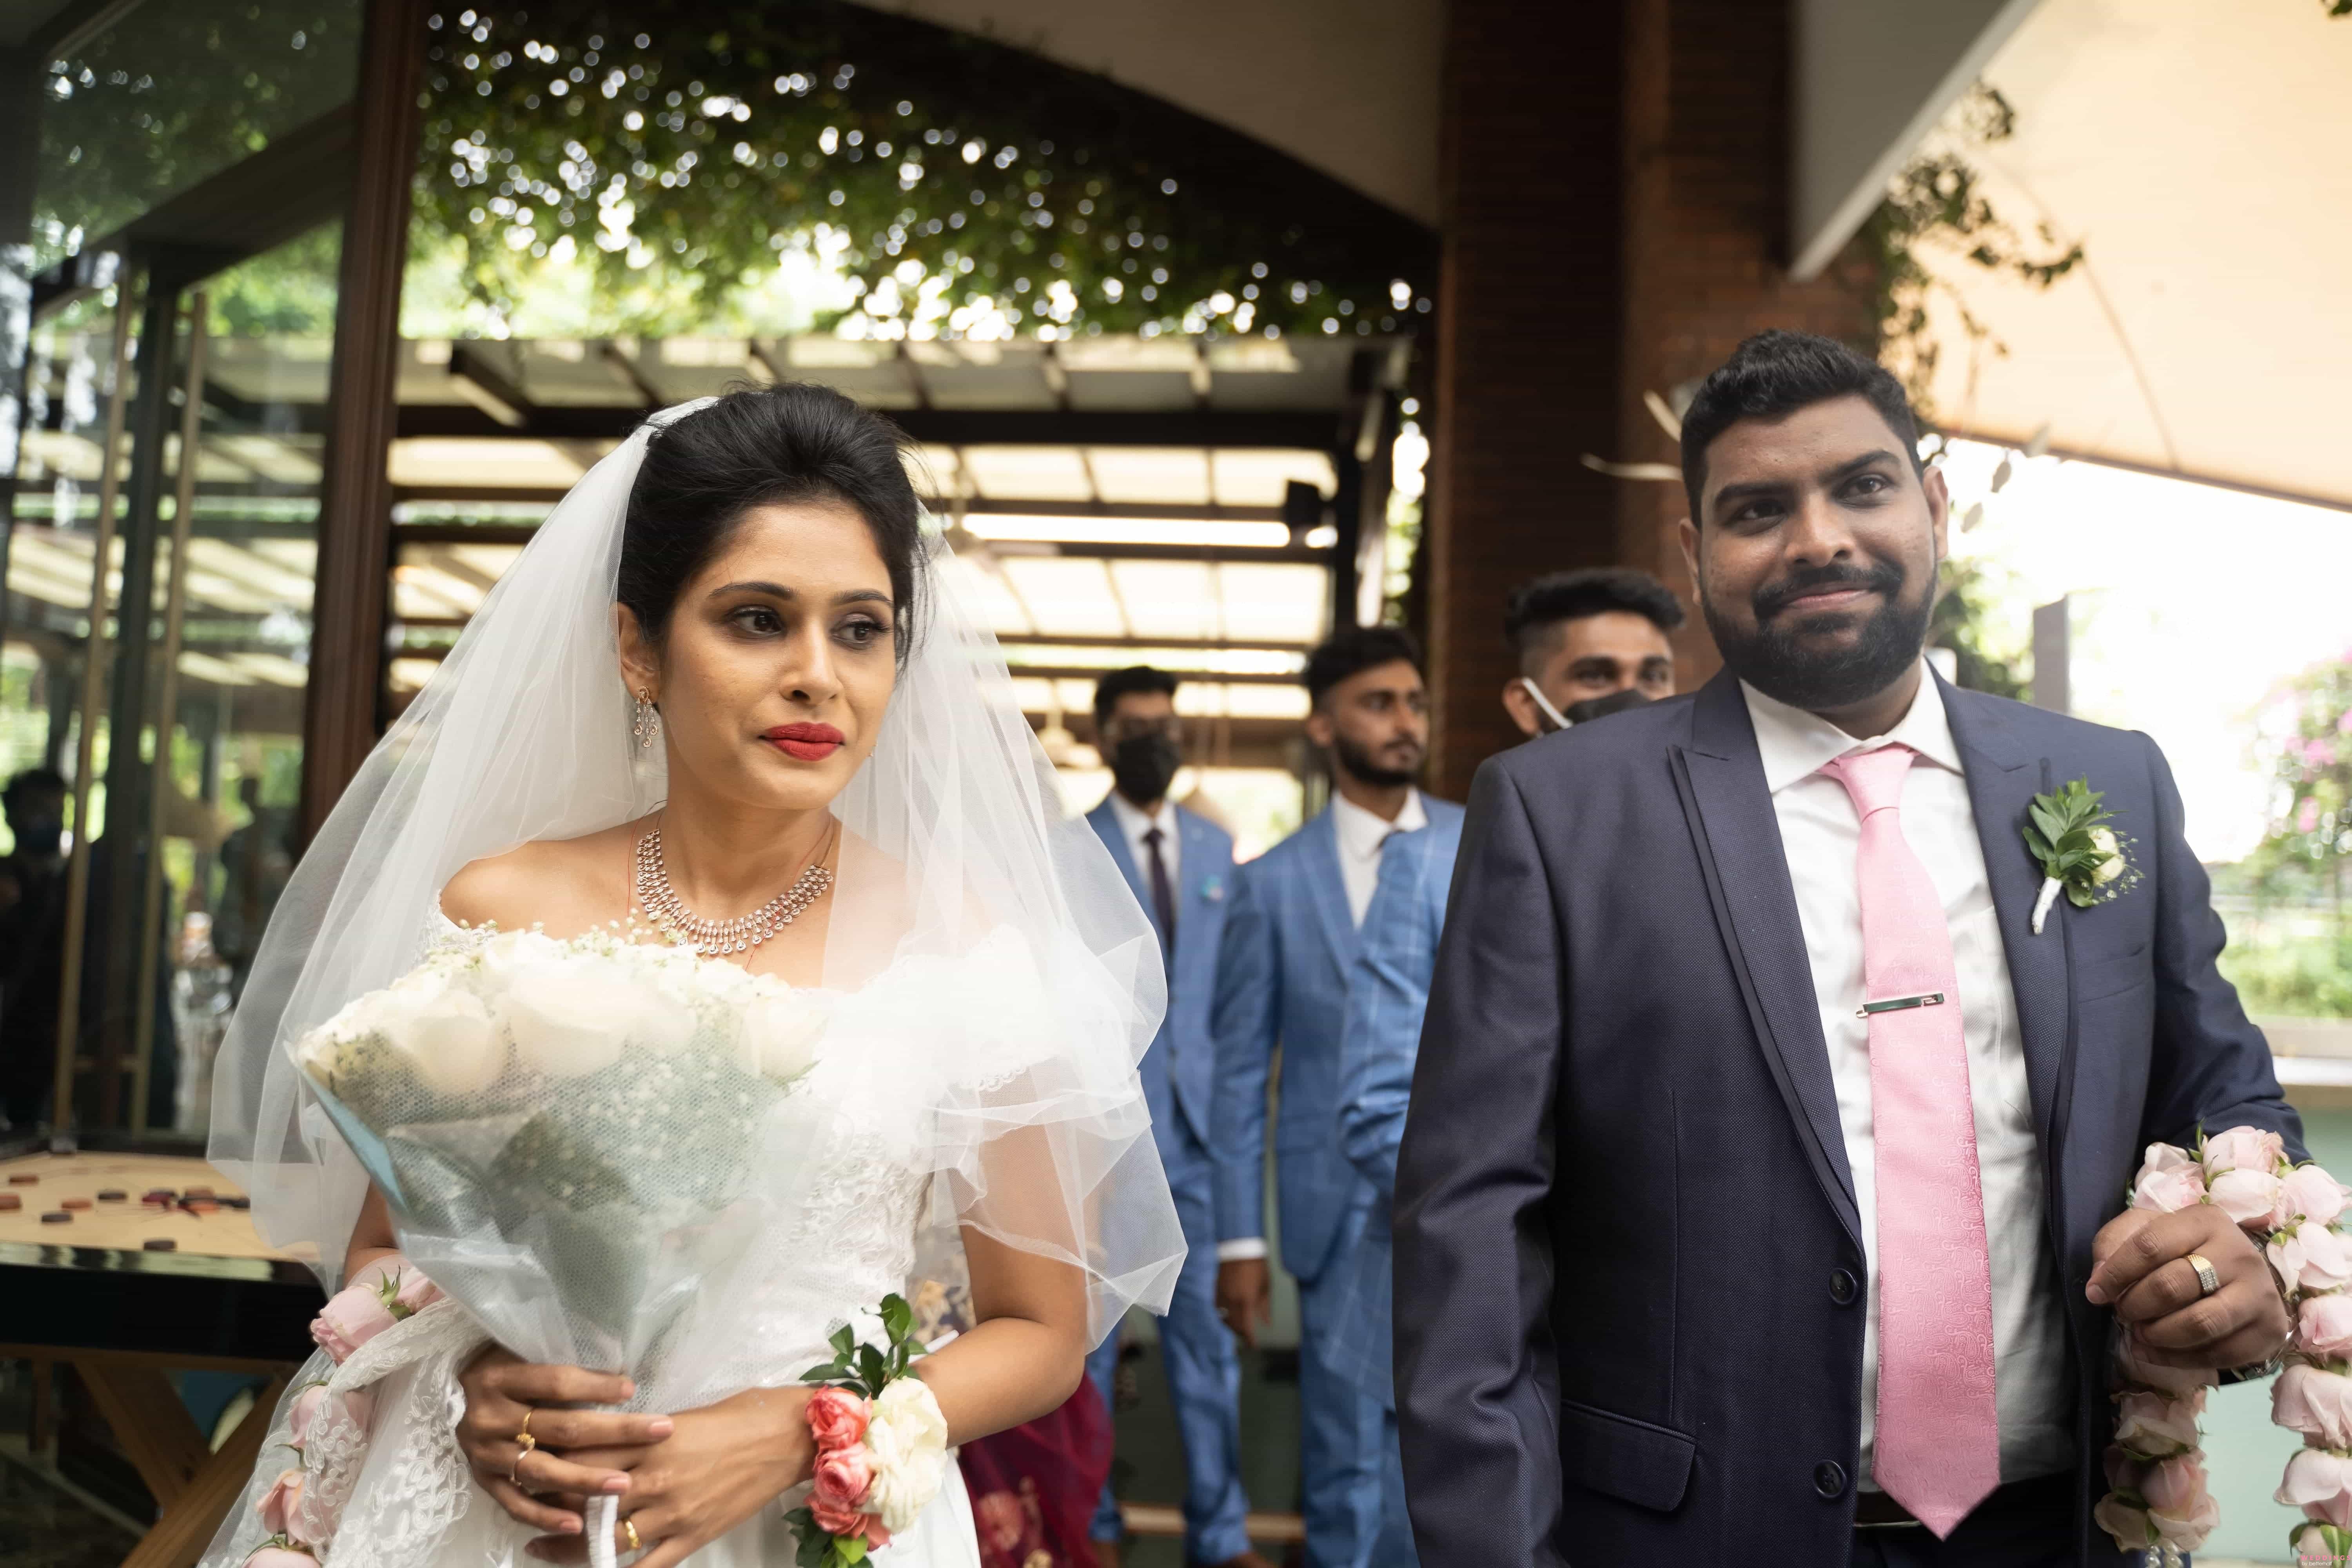 Kerala wedding dress code ideas |top Tucker| - YouTube